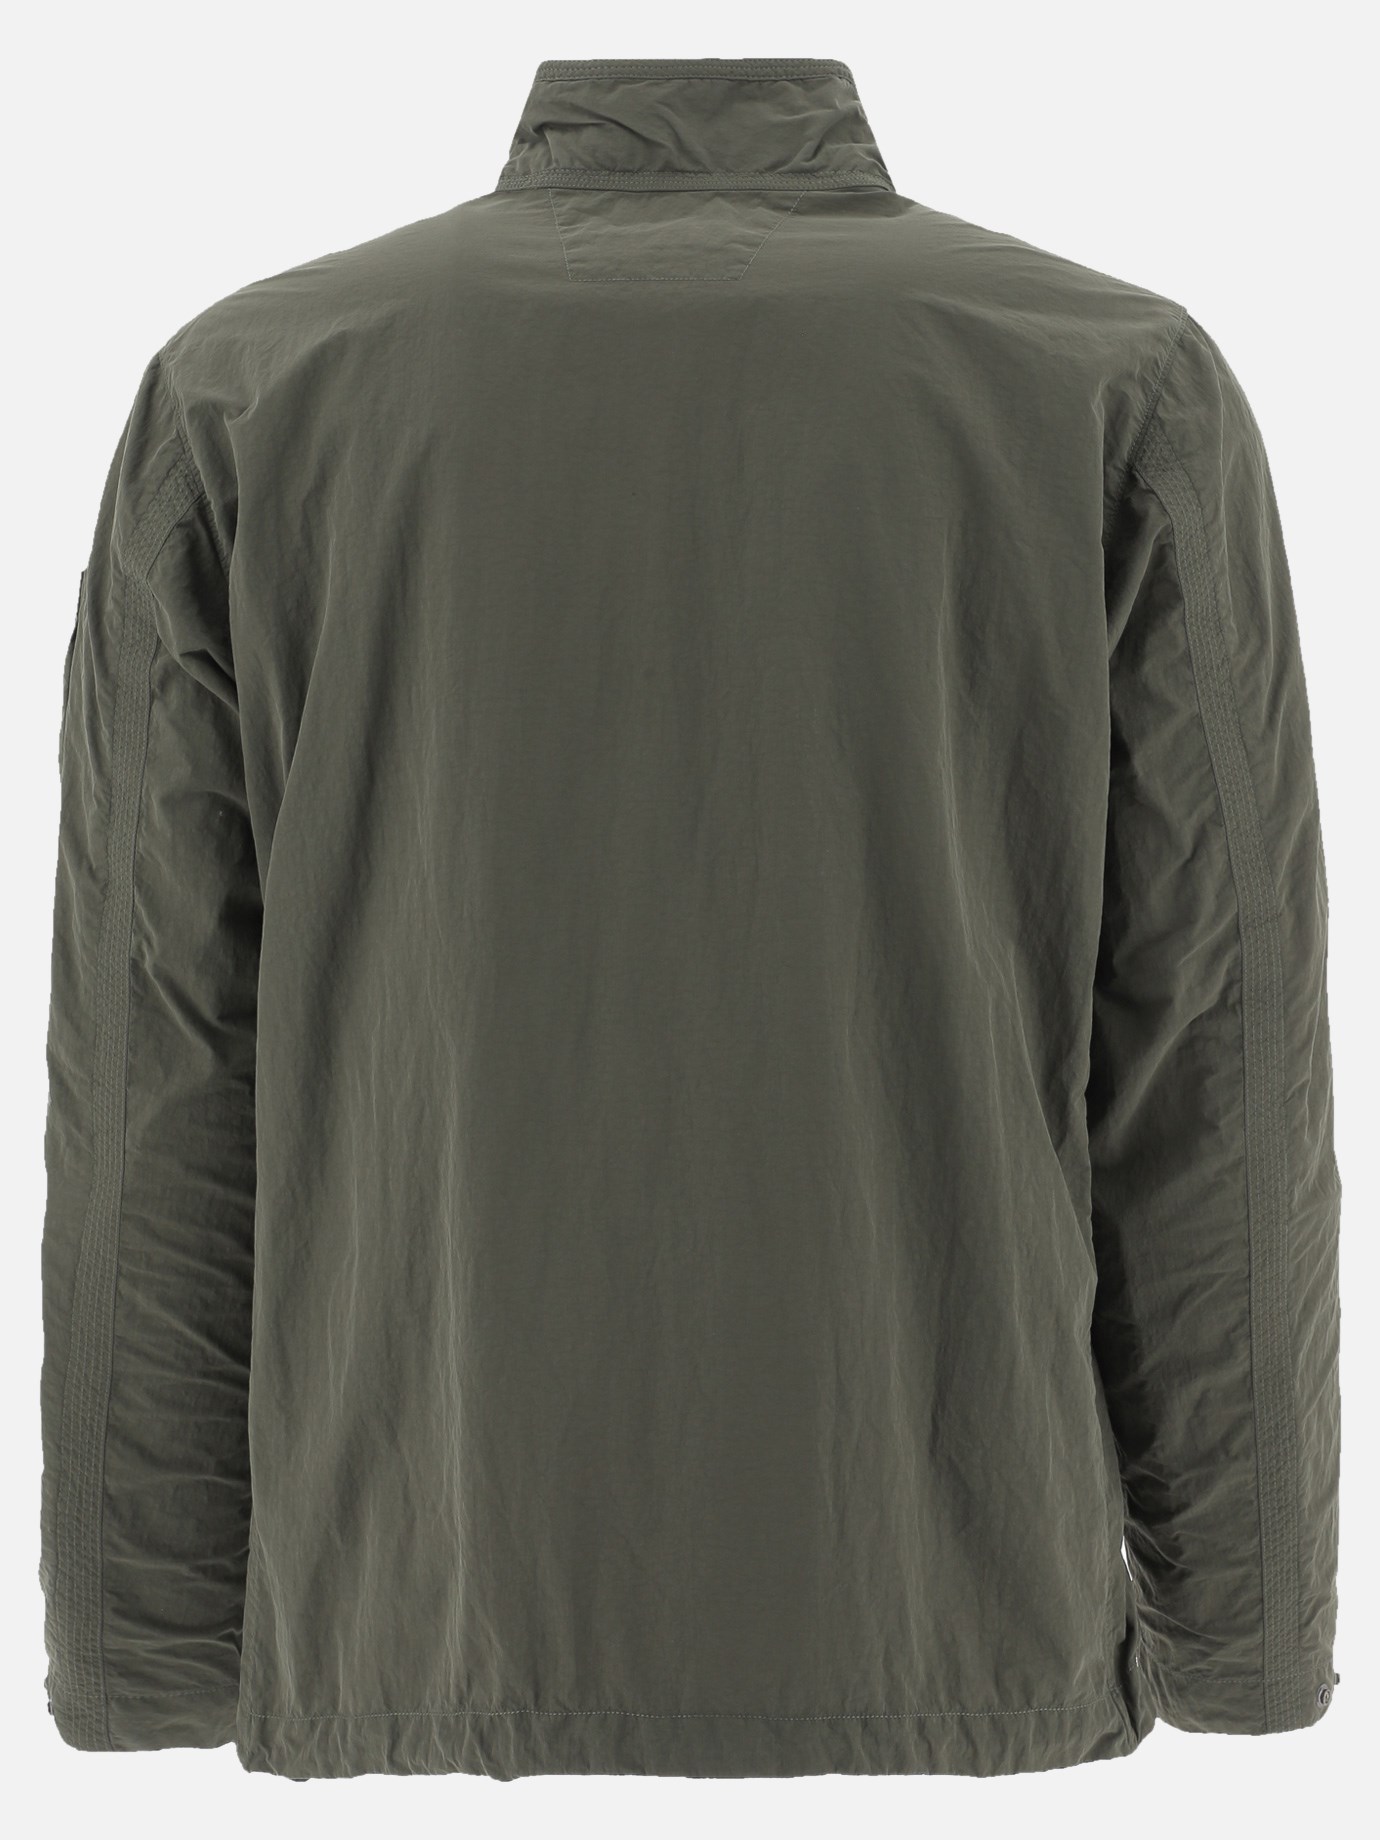  Flatt Nylon  overshirt by C.P. Company